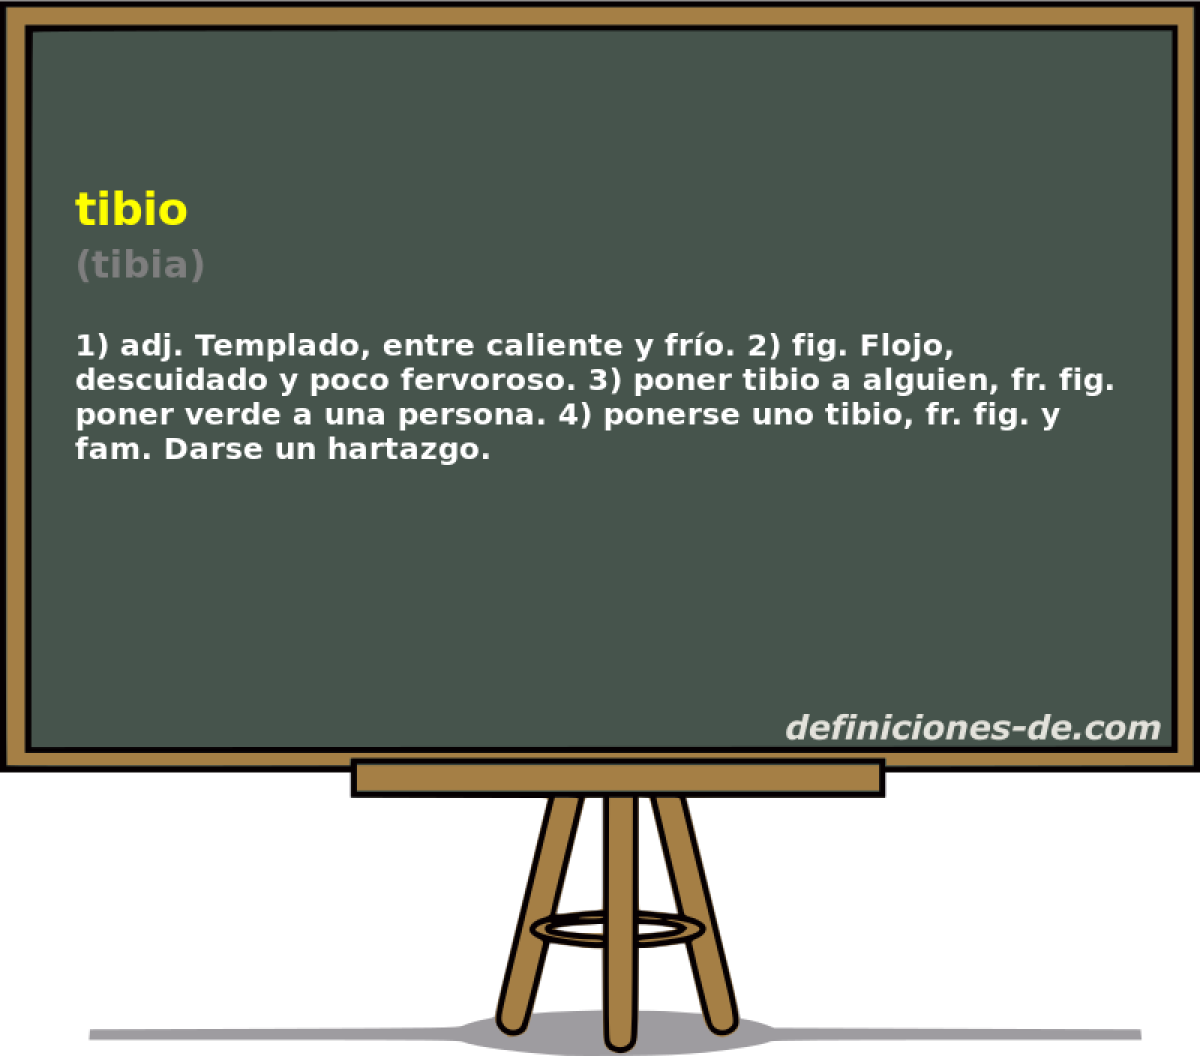 tibio (tibia)